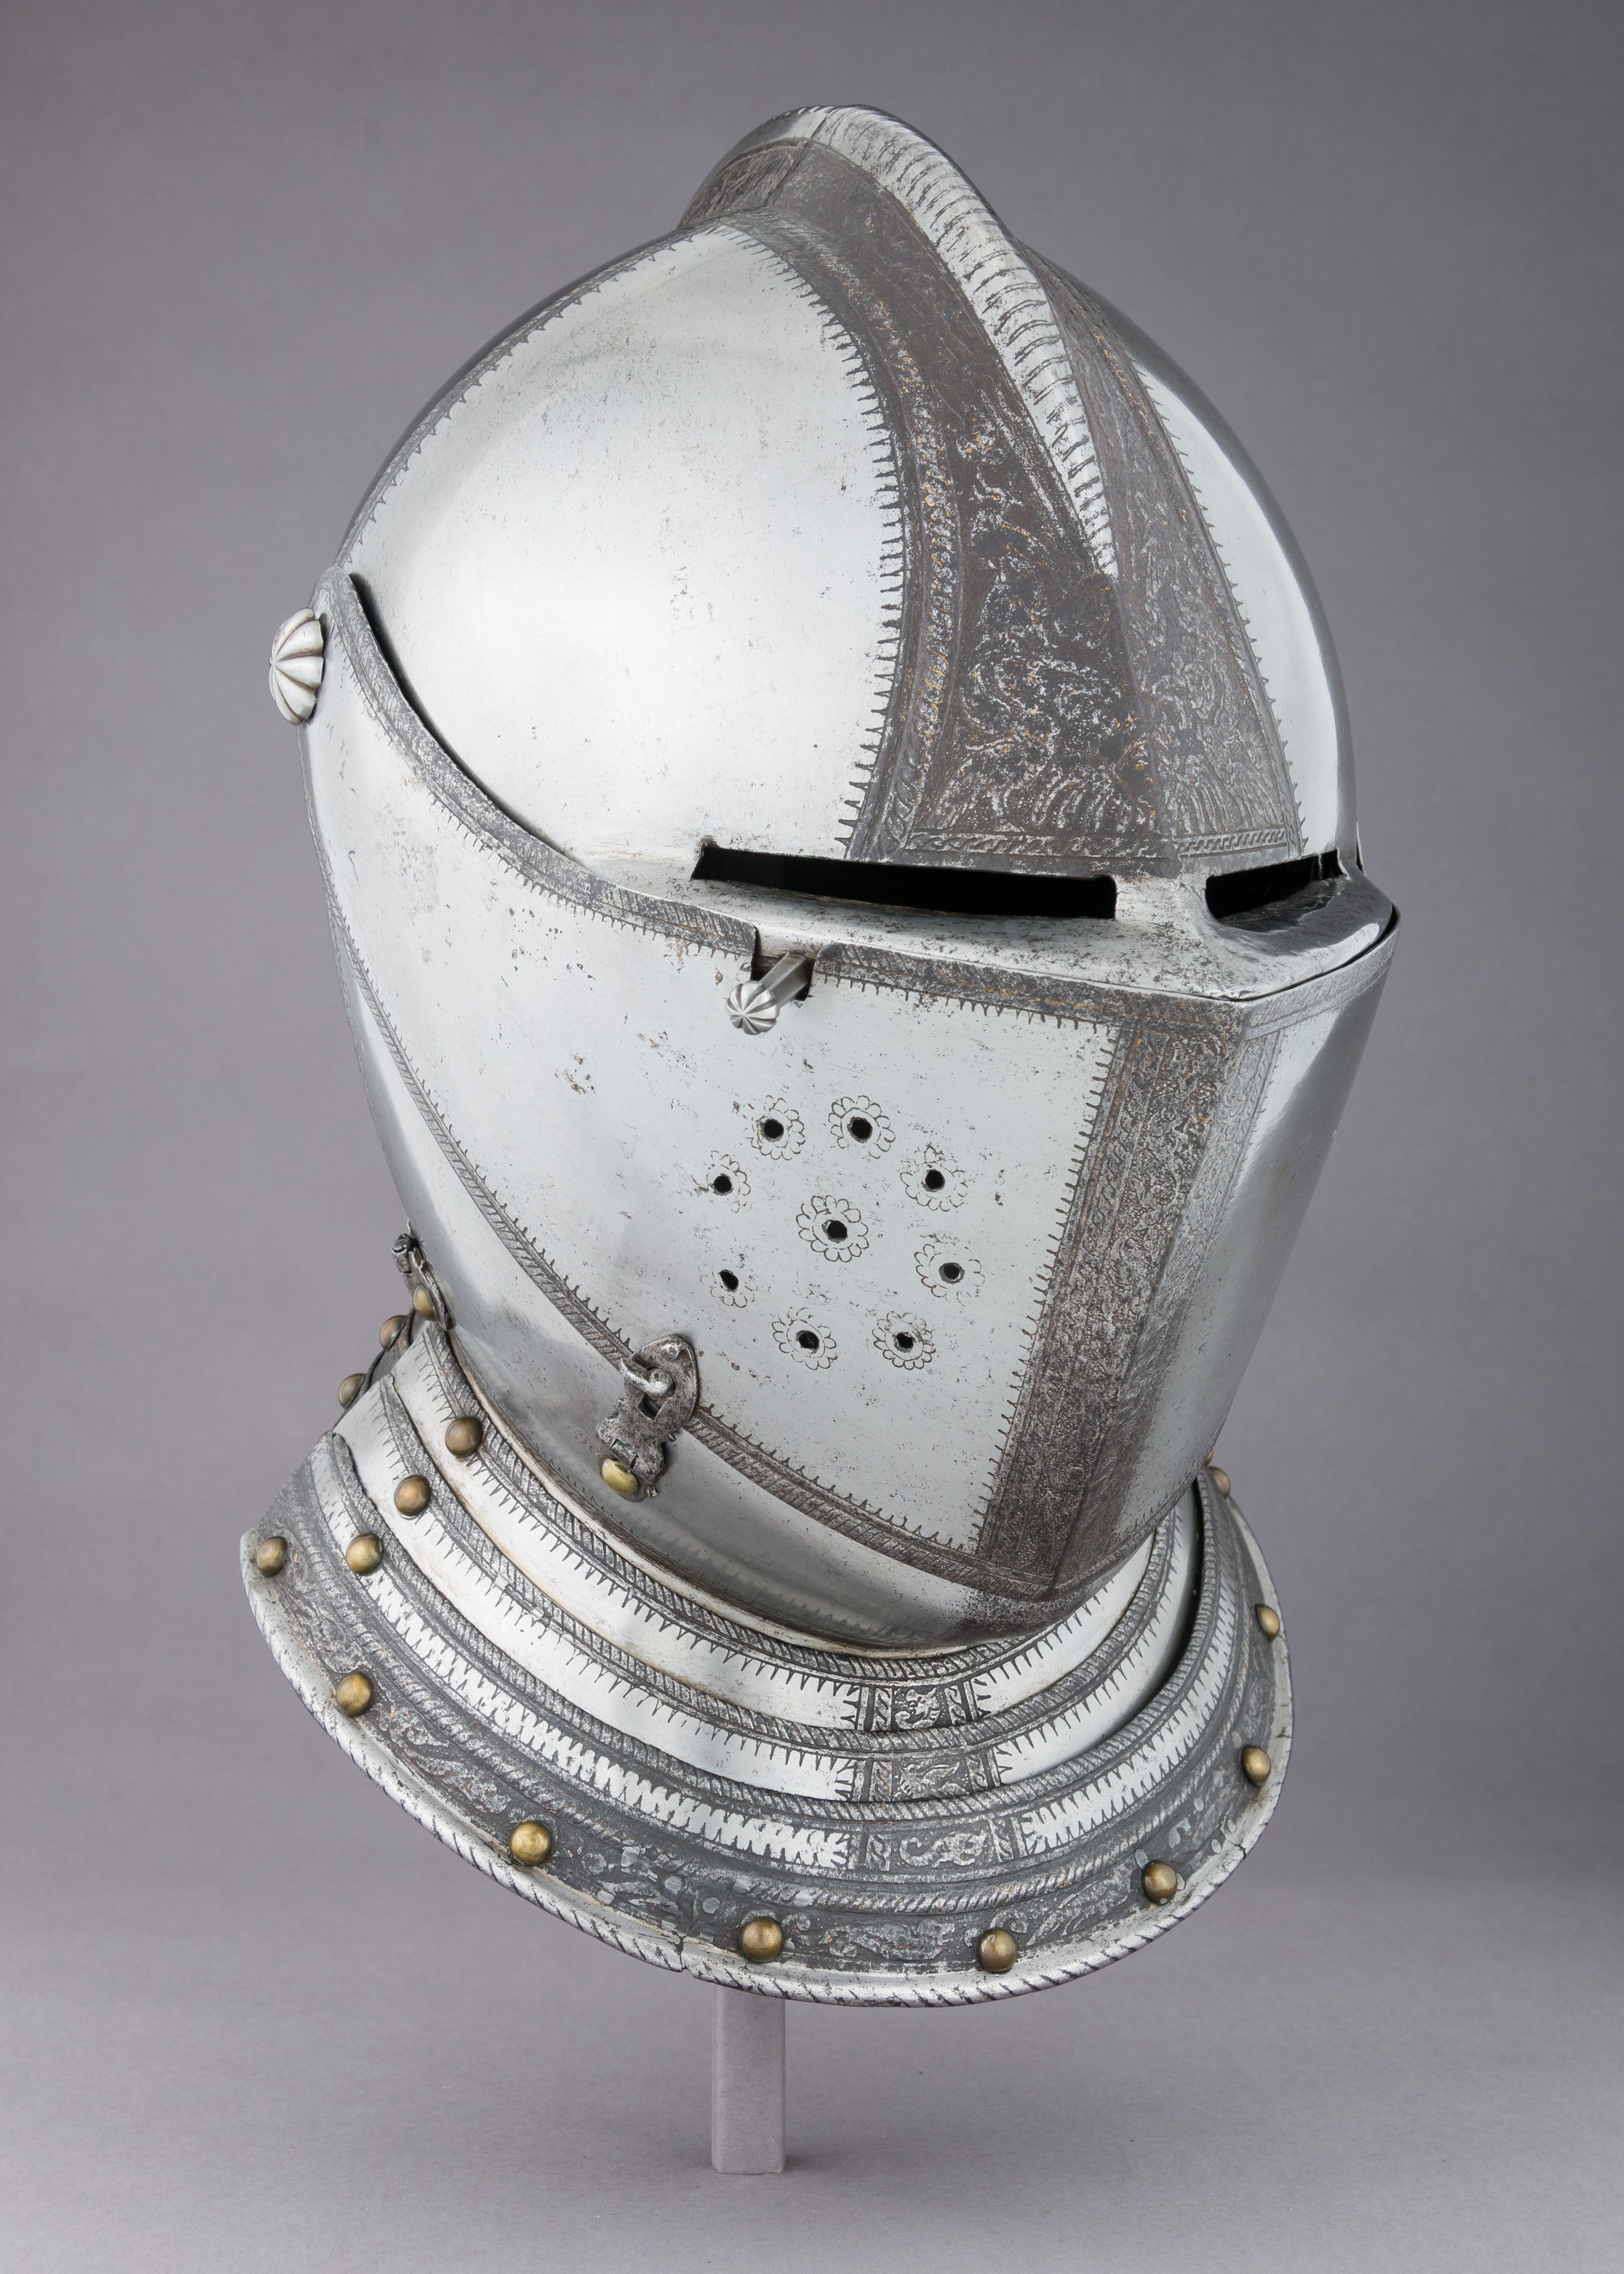 General 2857x4000 helmet medieval medieval clothes engraving armor portrait display simple background